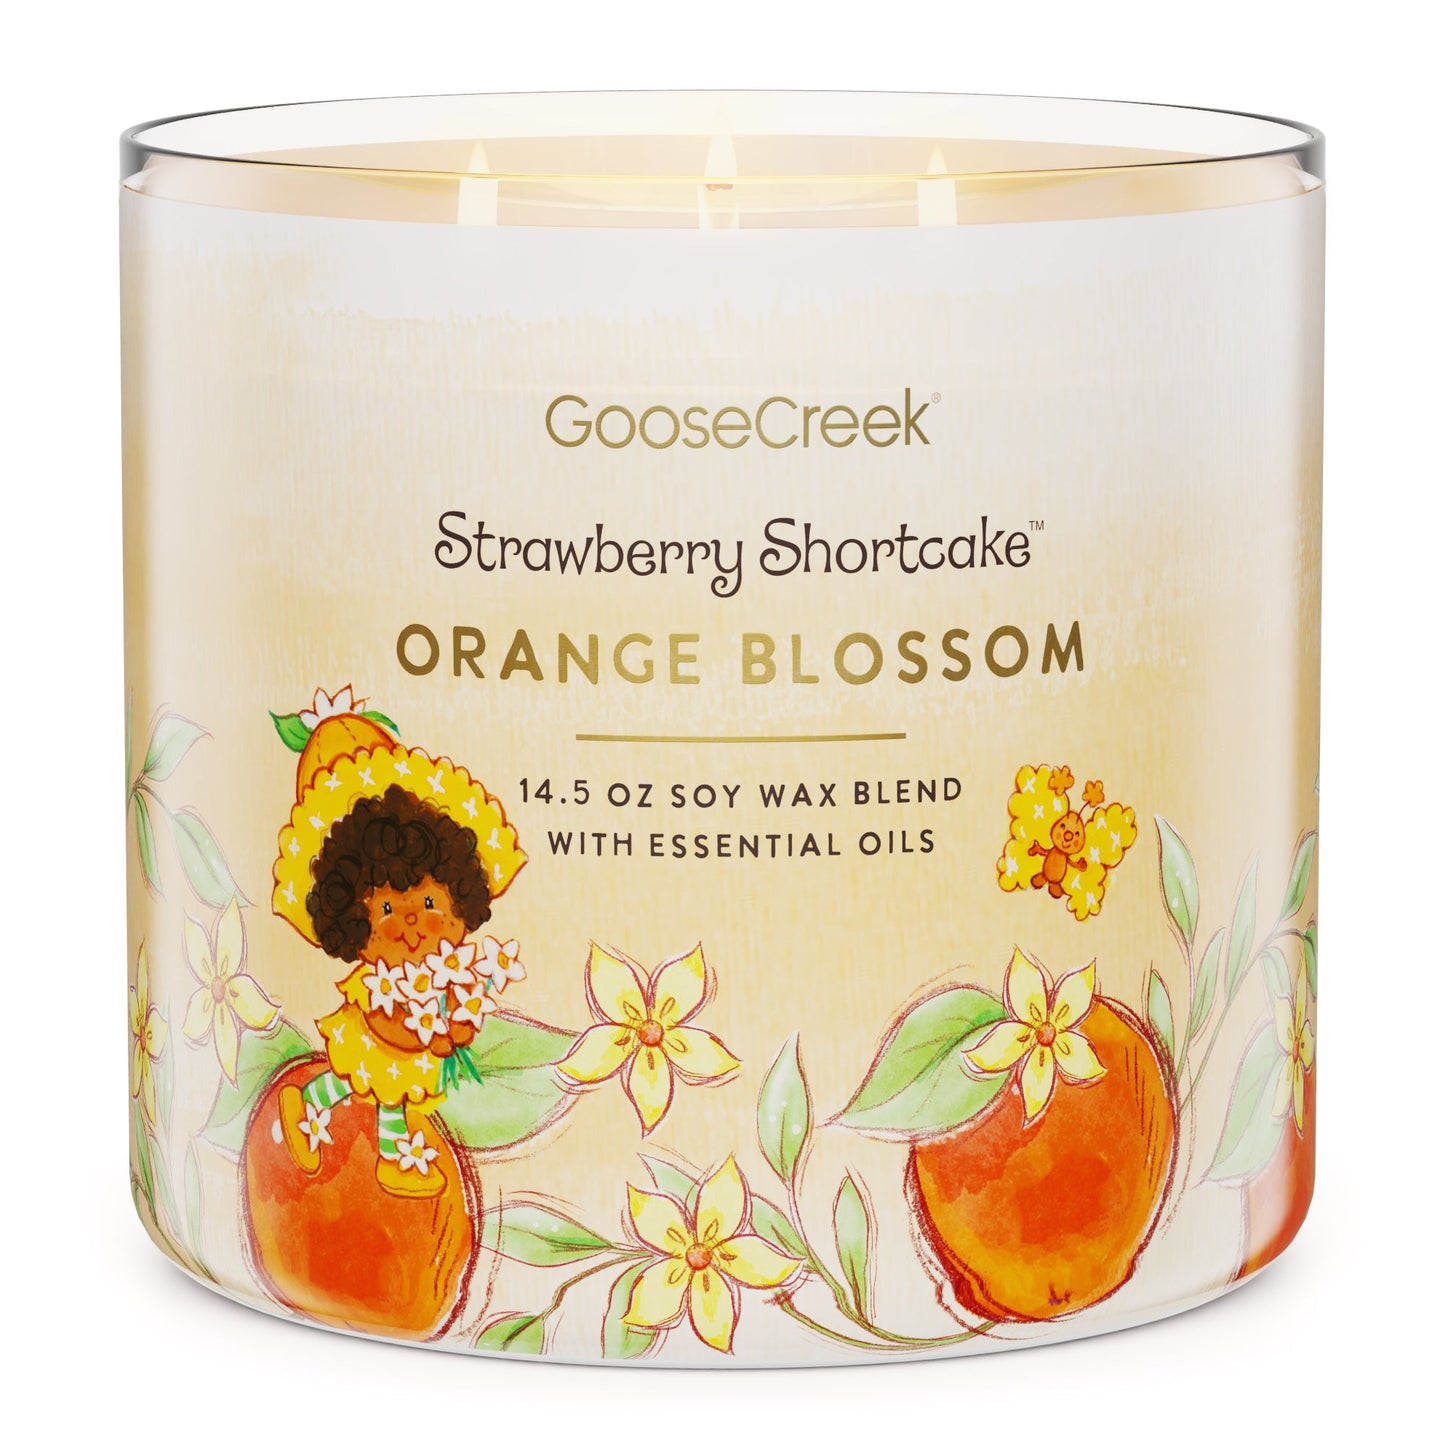 Orange Blossom - 100% Absolute Essential Oil